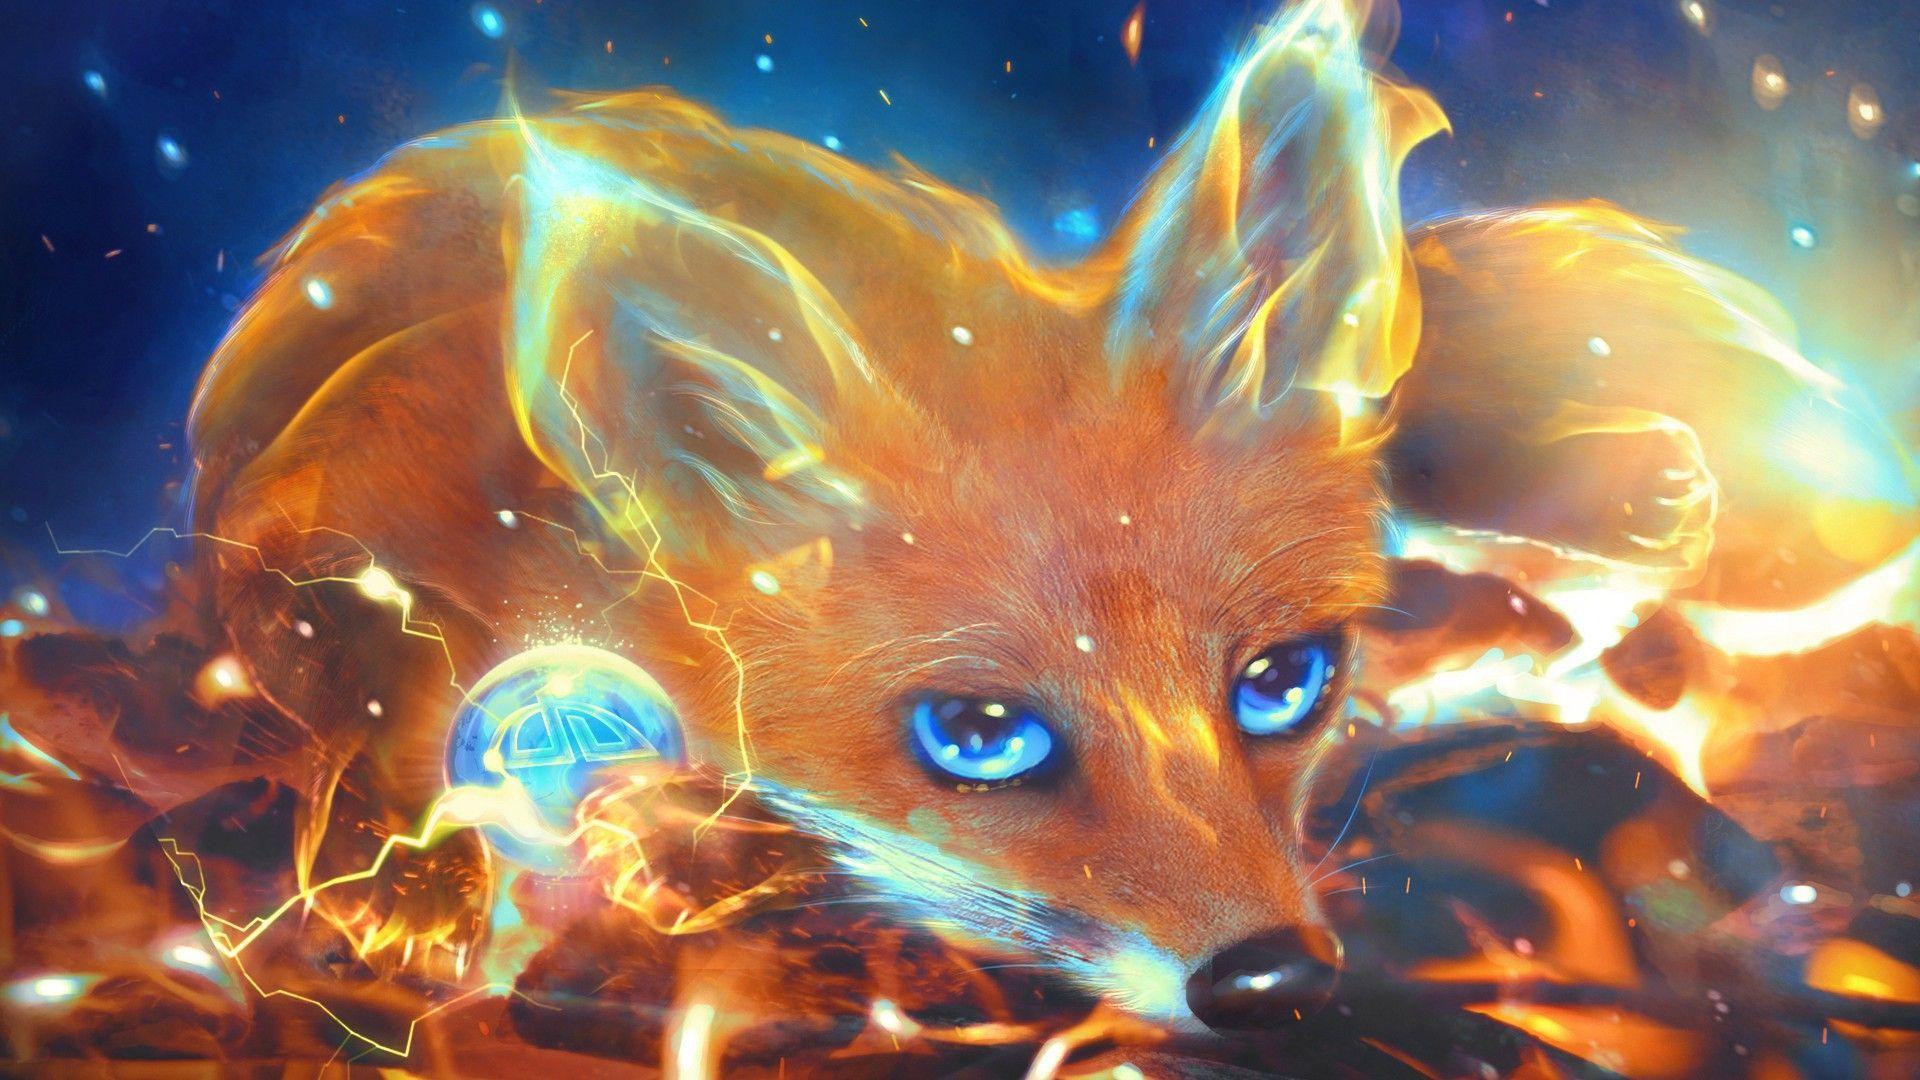 Anime Fox Desktop Wallpapers - Top Free Anime Fox Desktop Backgrounds